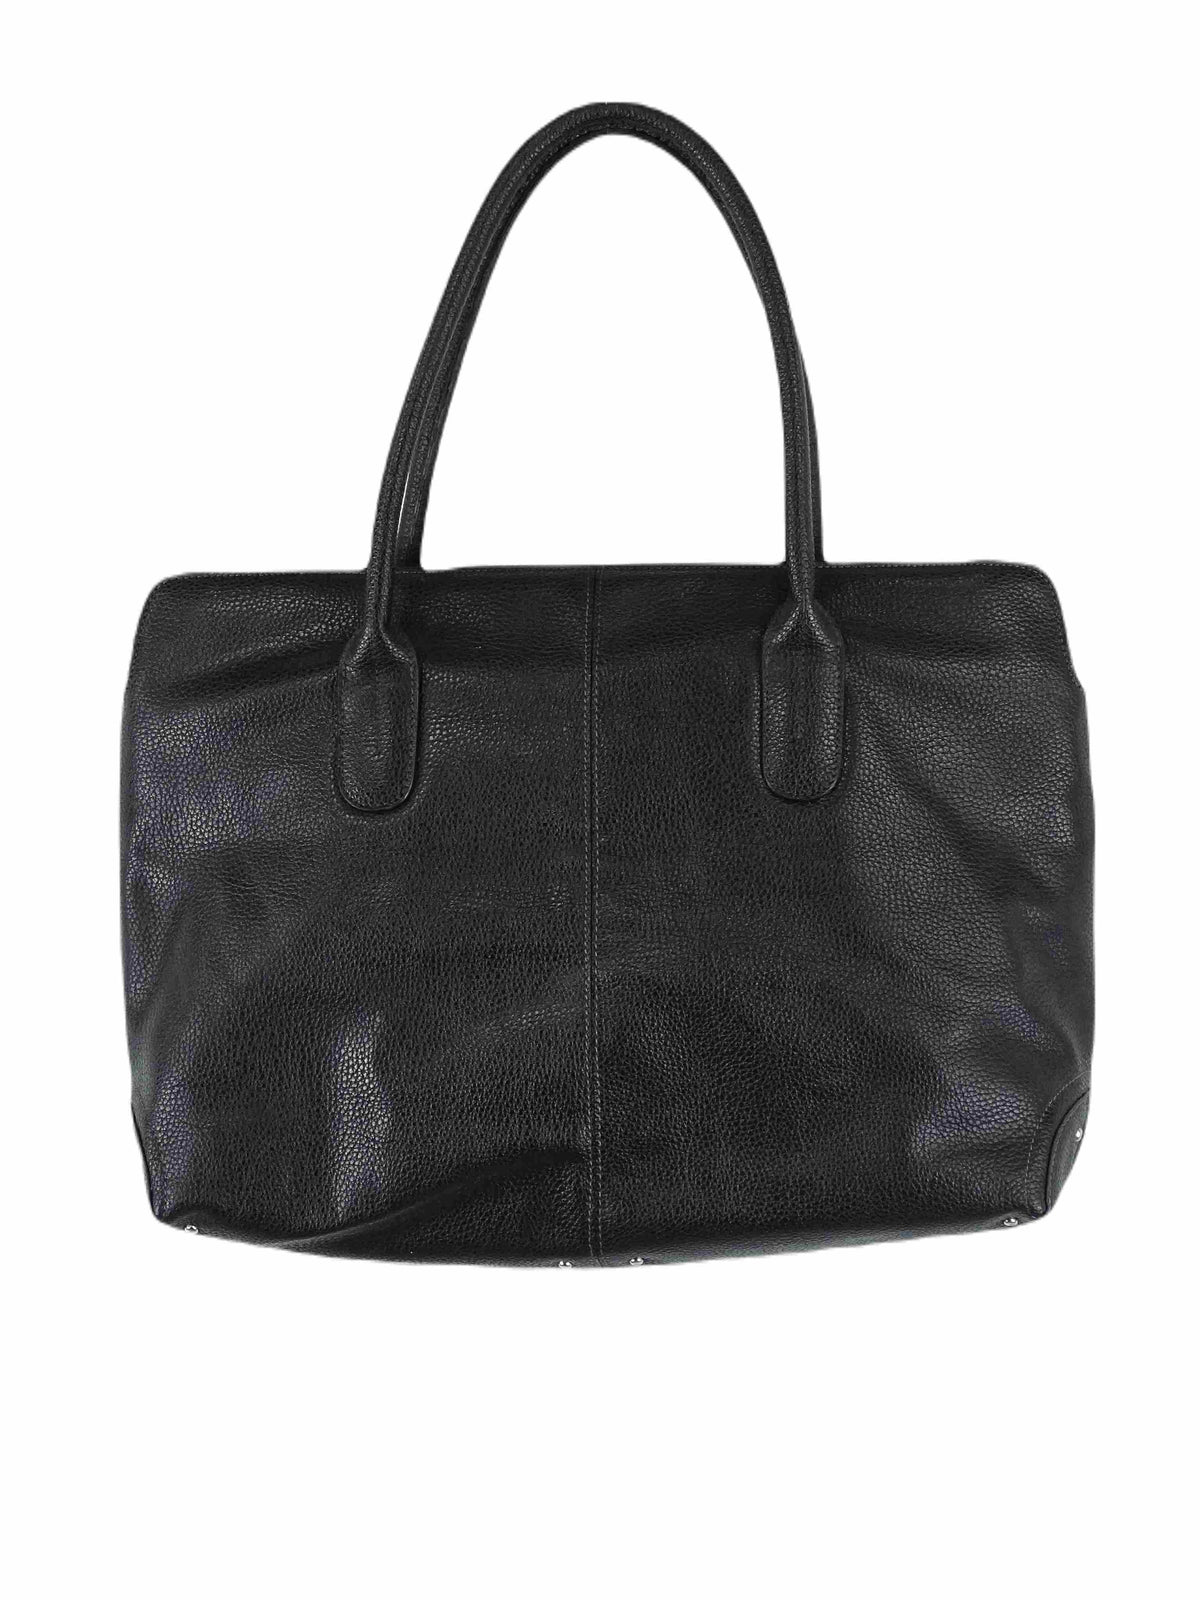 Boutique Black Leather Handbag